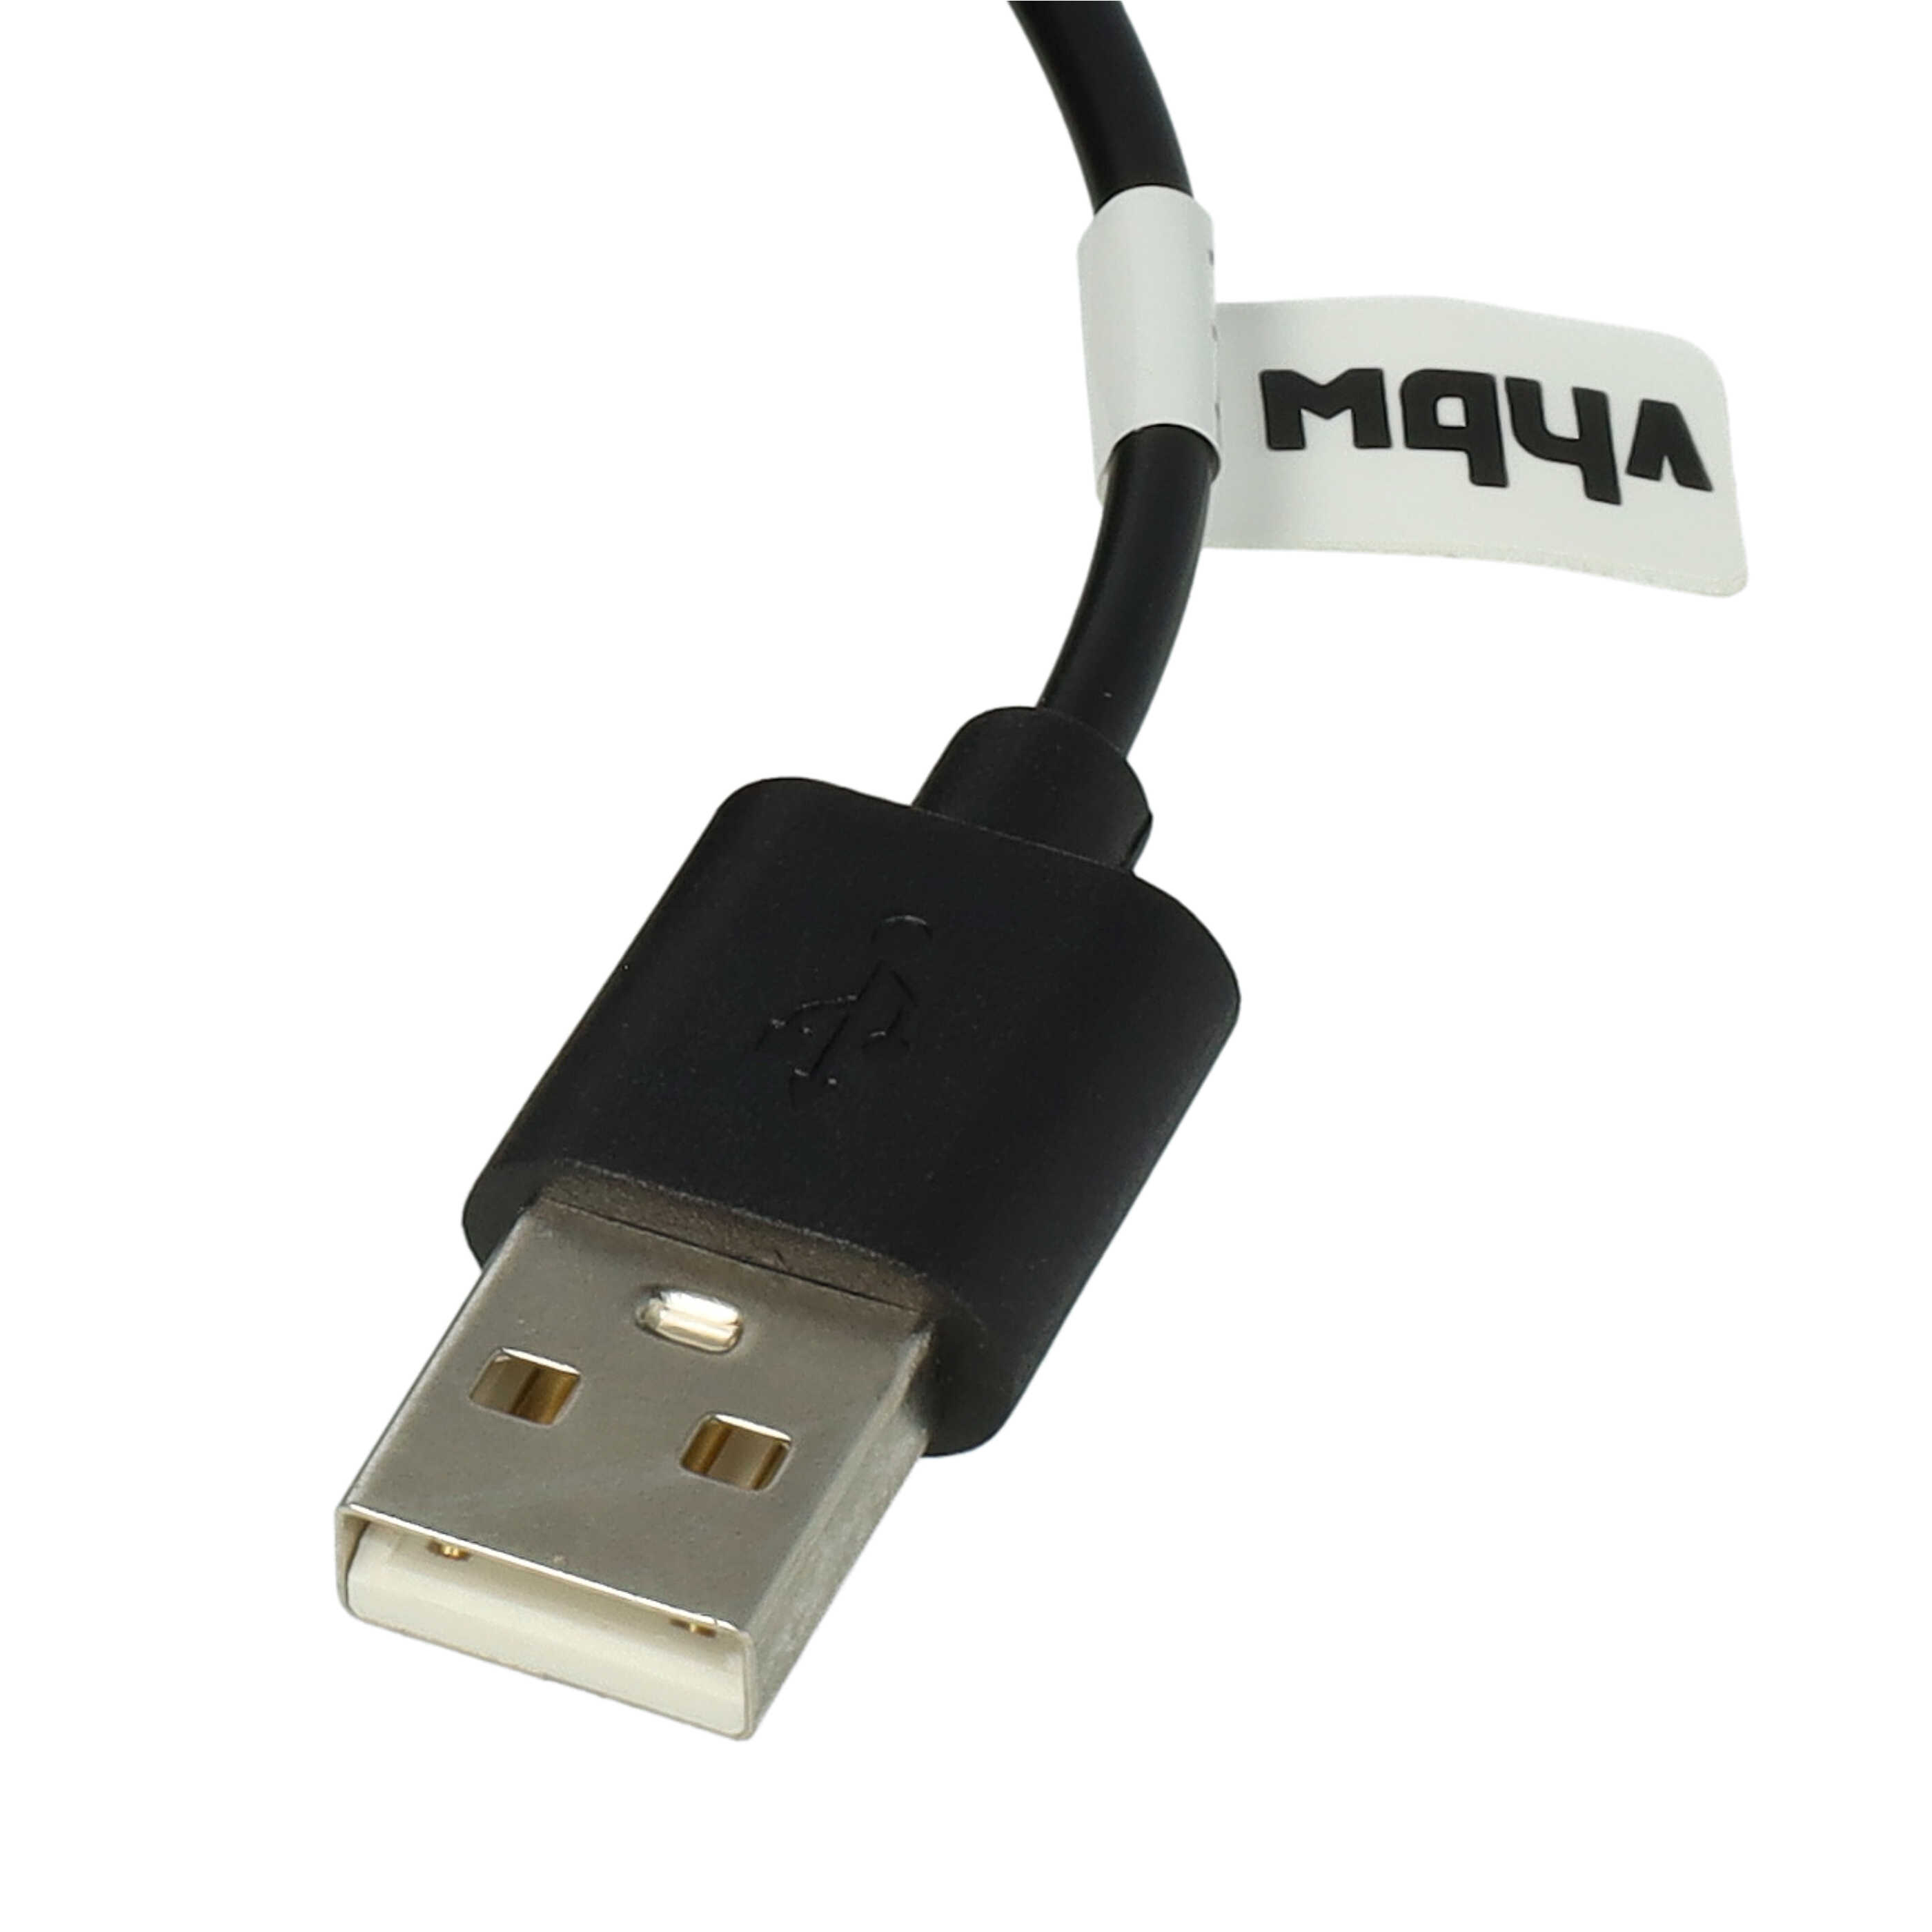 Cable de carga USB para smartwatch Mobvoi TicWatch GTH - negro 120 cm